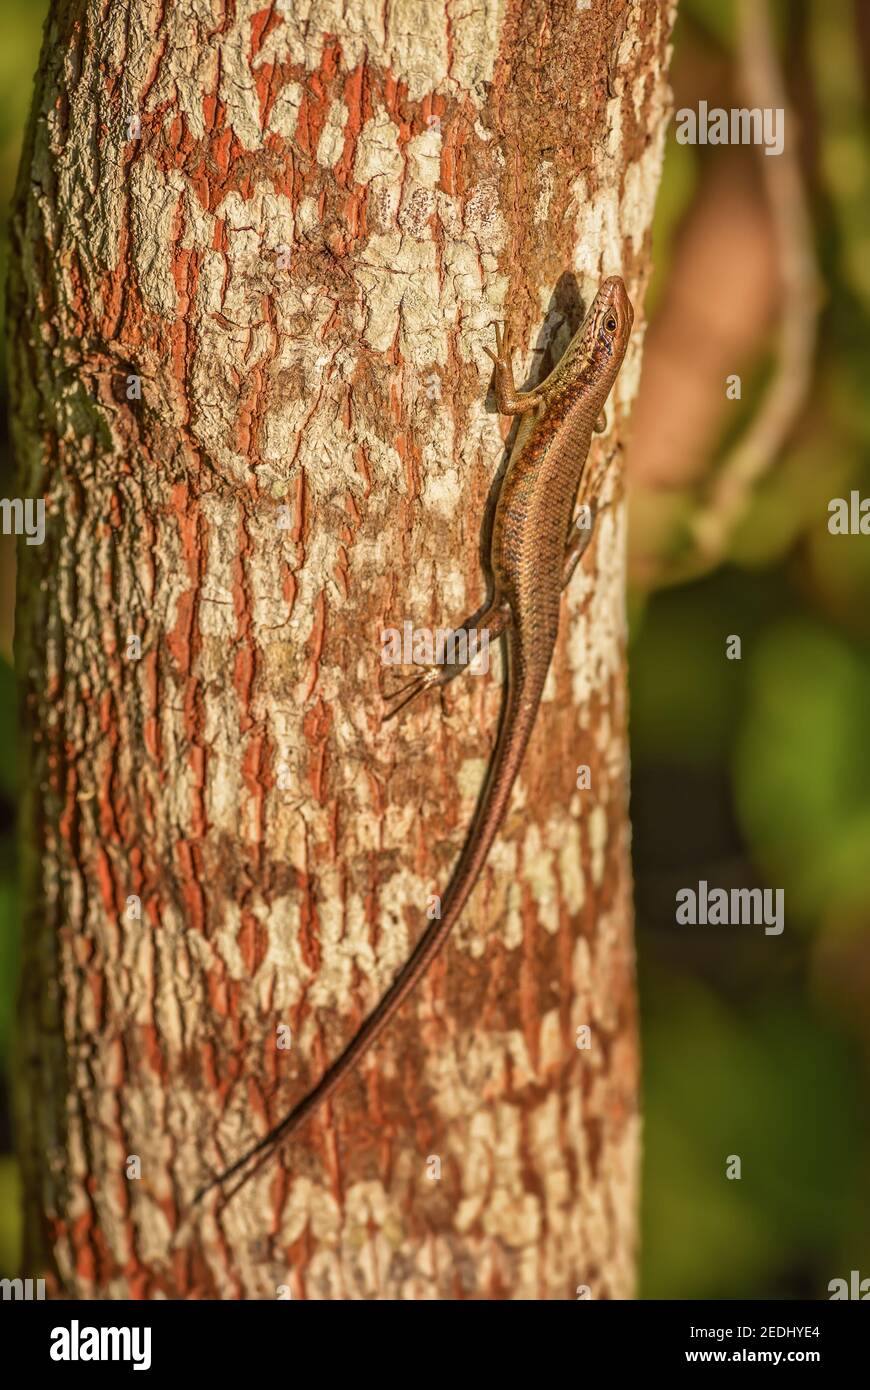 Speckle-lipped Skink - Mabuya maculilabris, beautiful common lizard from African woodlands and gardens, Zanzibar, Tanzania. Stock Photo